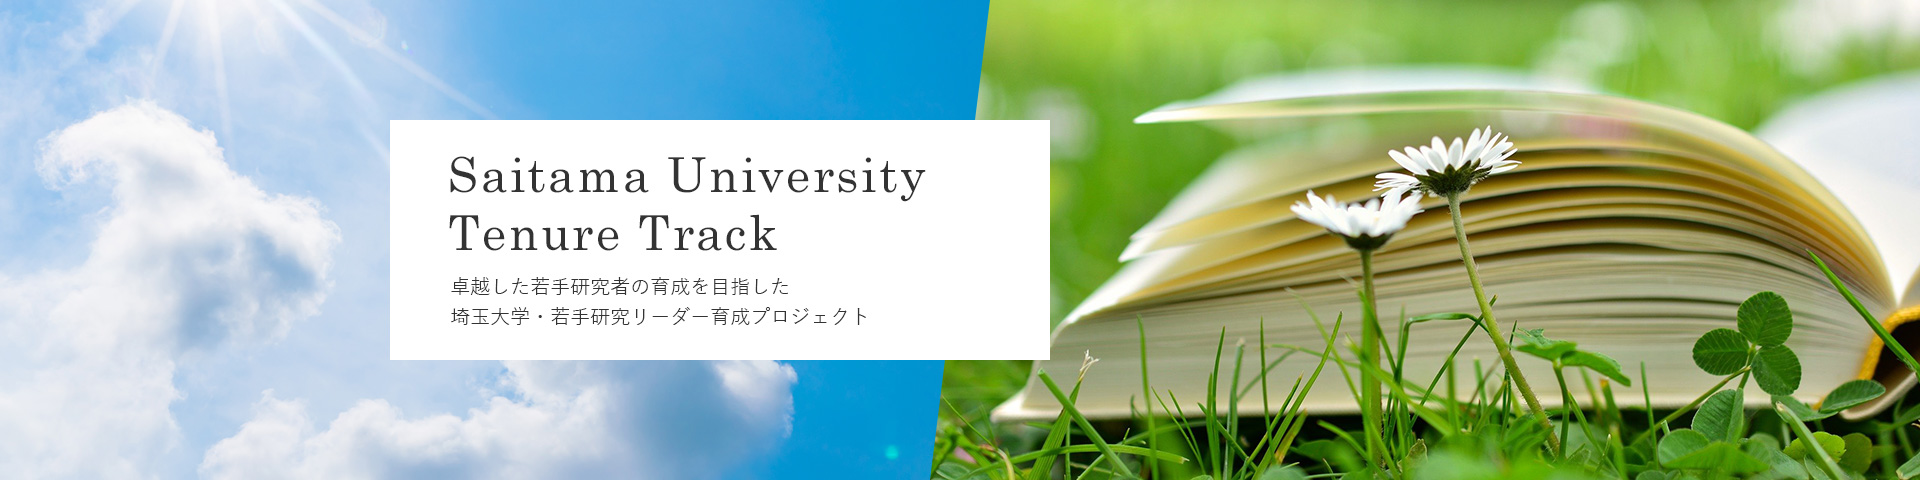 Saitama University Tenure Track 卓越した若手研究者の育成を目指した埼玉大学・若手研究リーダー育成プロジェクト